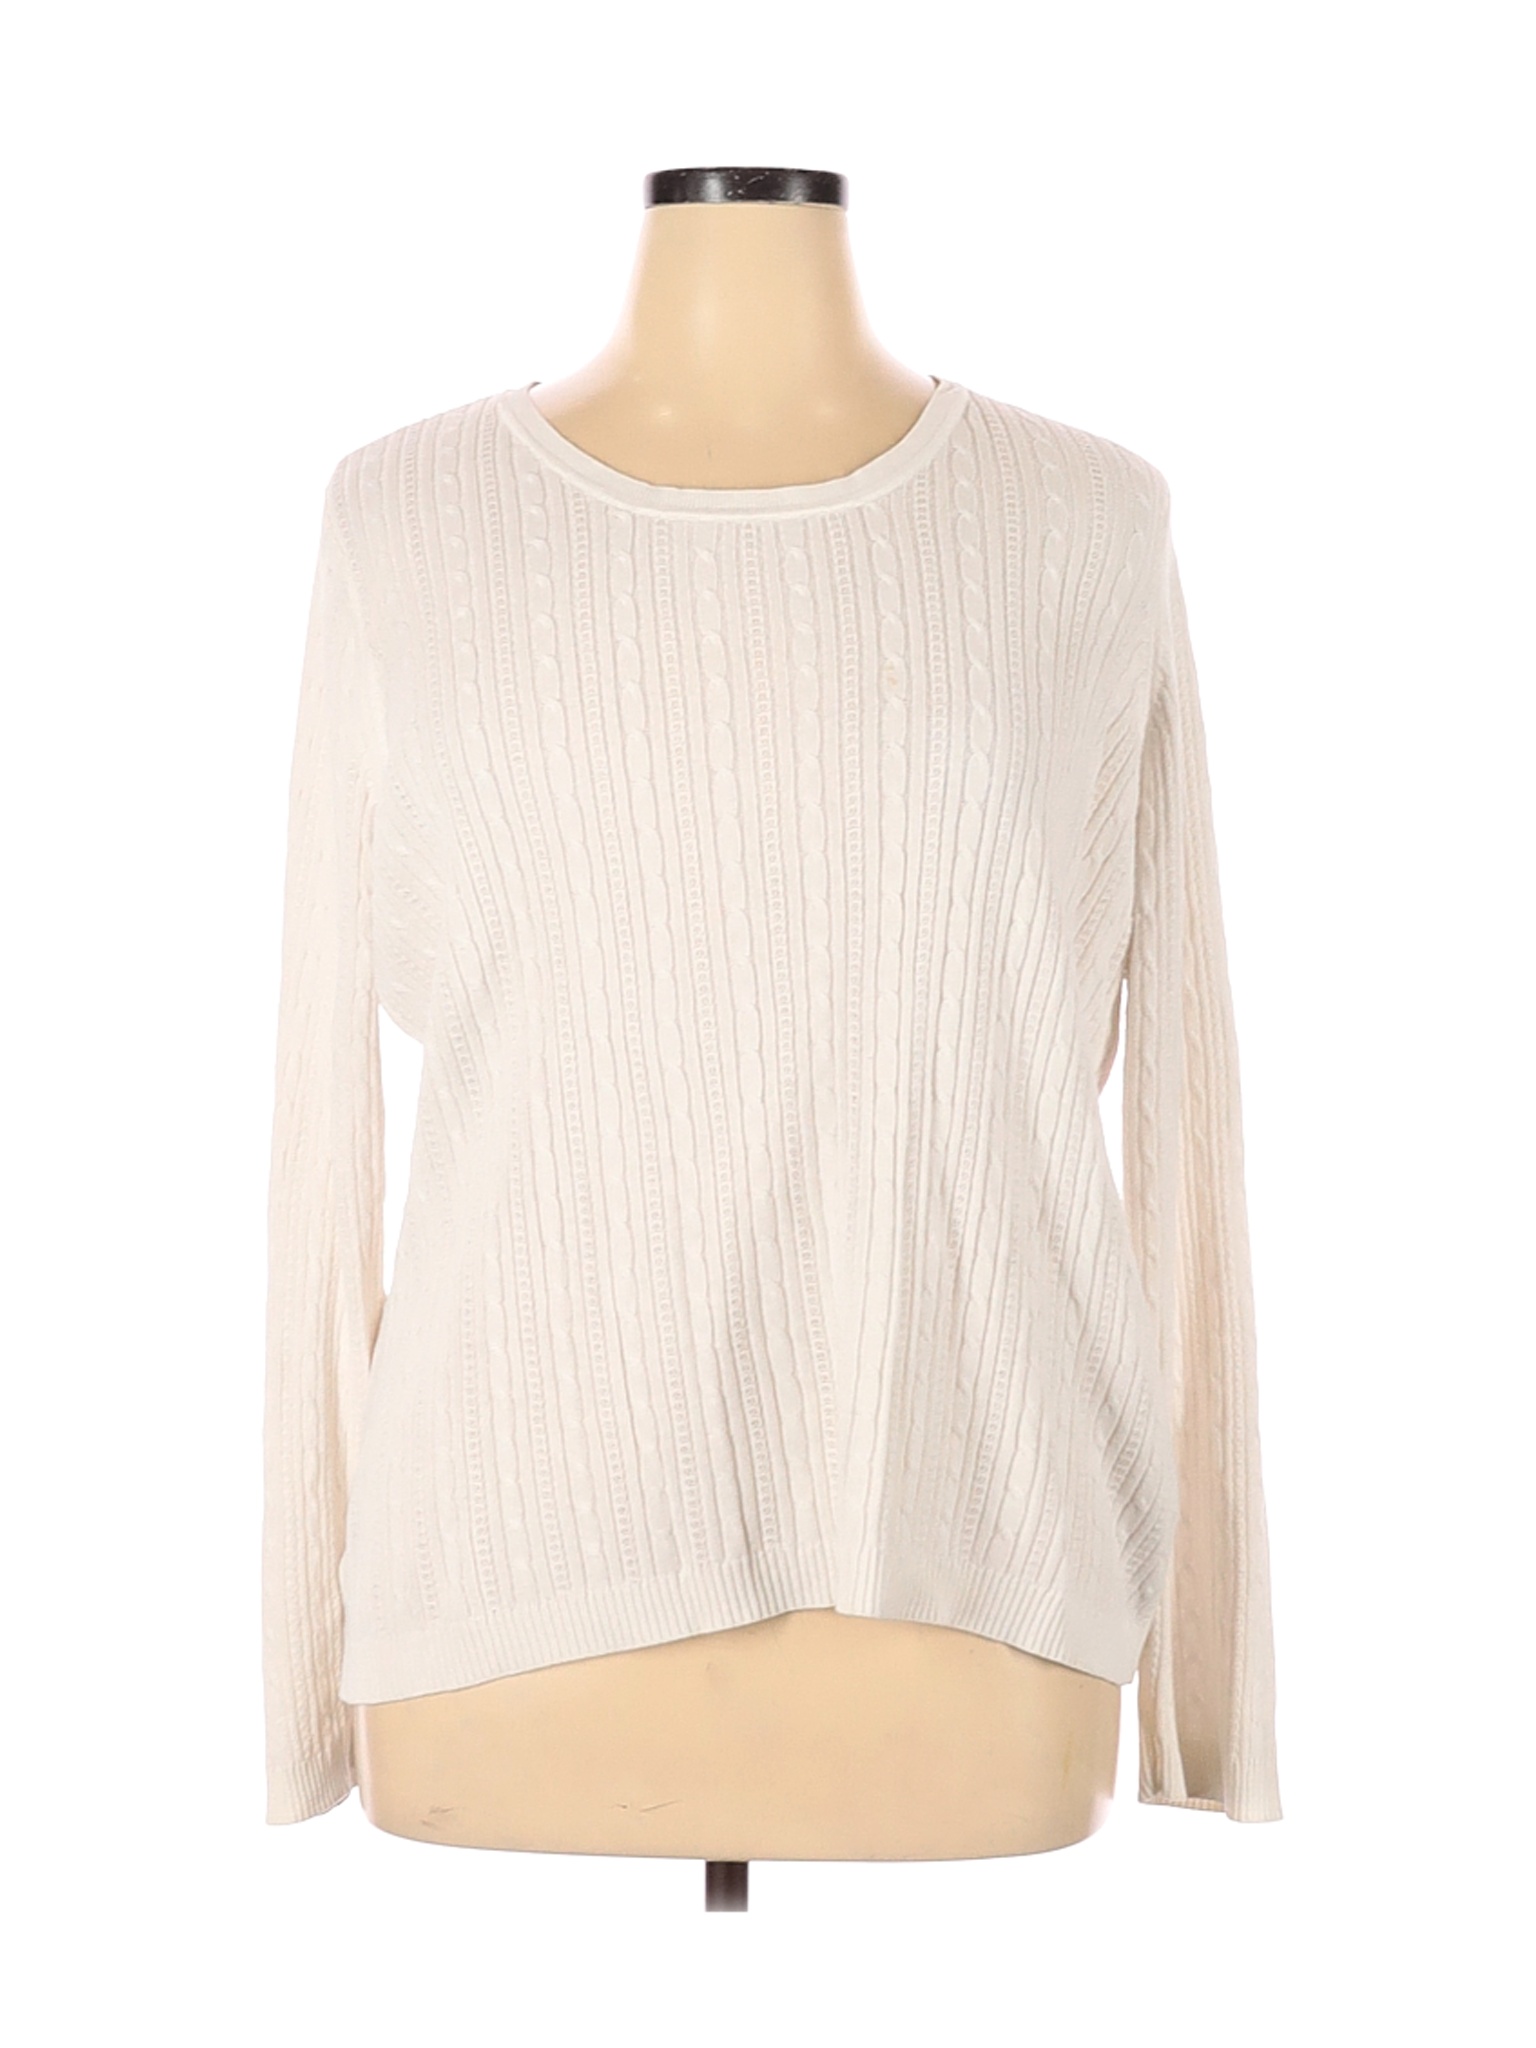 Croft & Barrow Women White Pullover Sweater 1X Plus | eBay